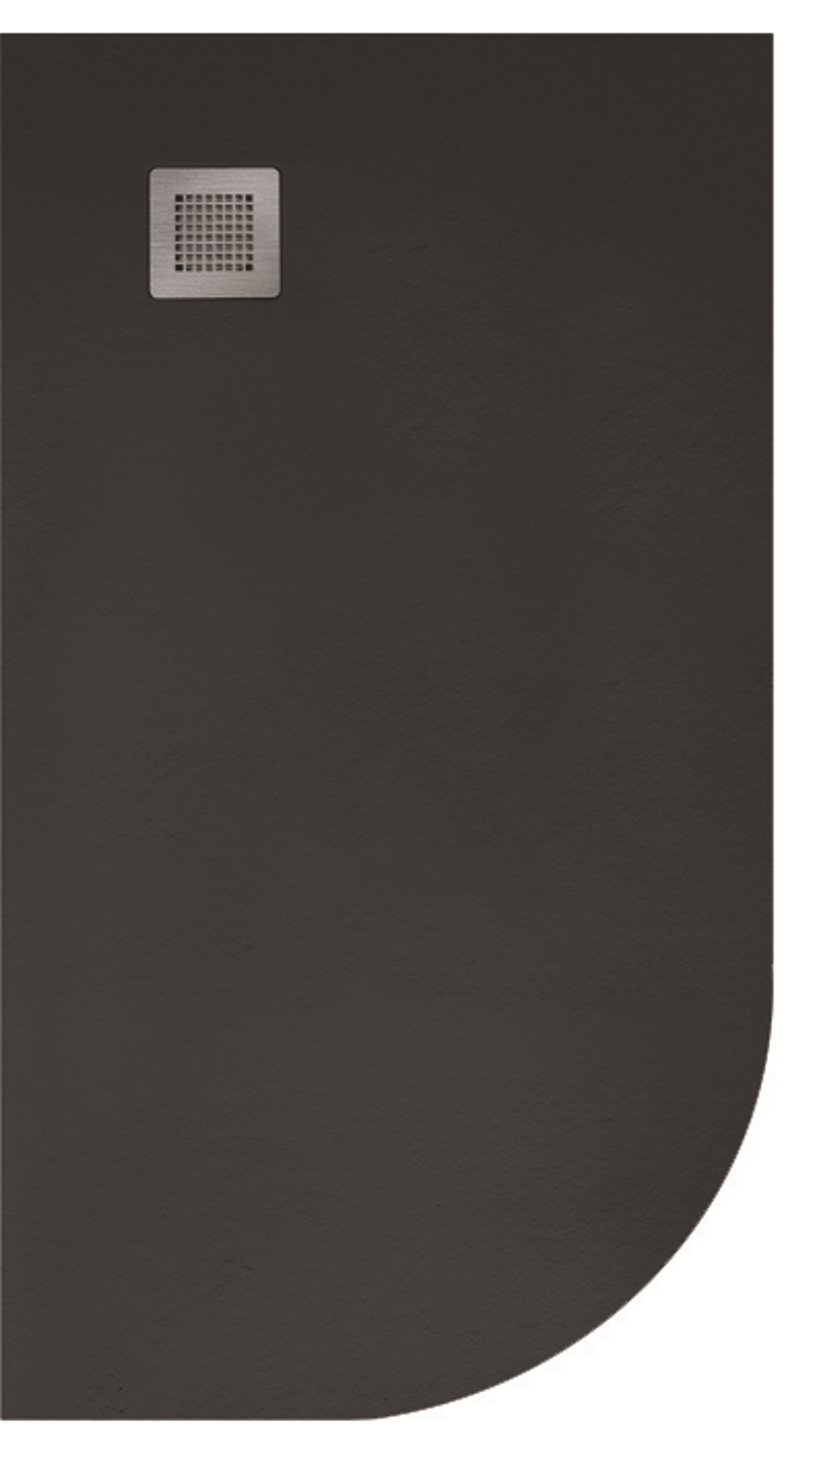 Slate Black 1200x900mm LH Offset Quadran